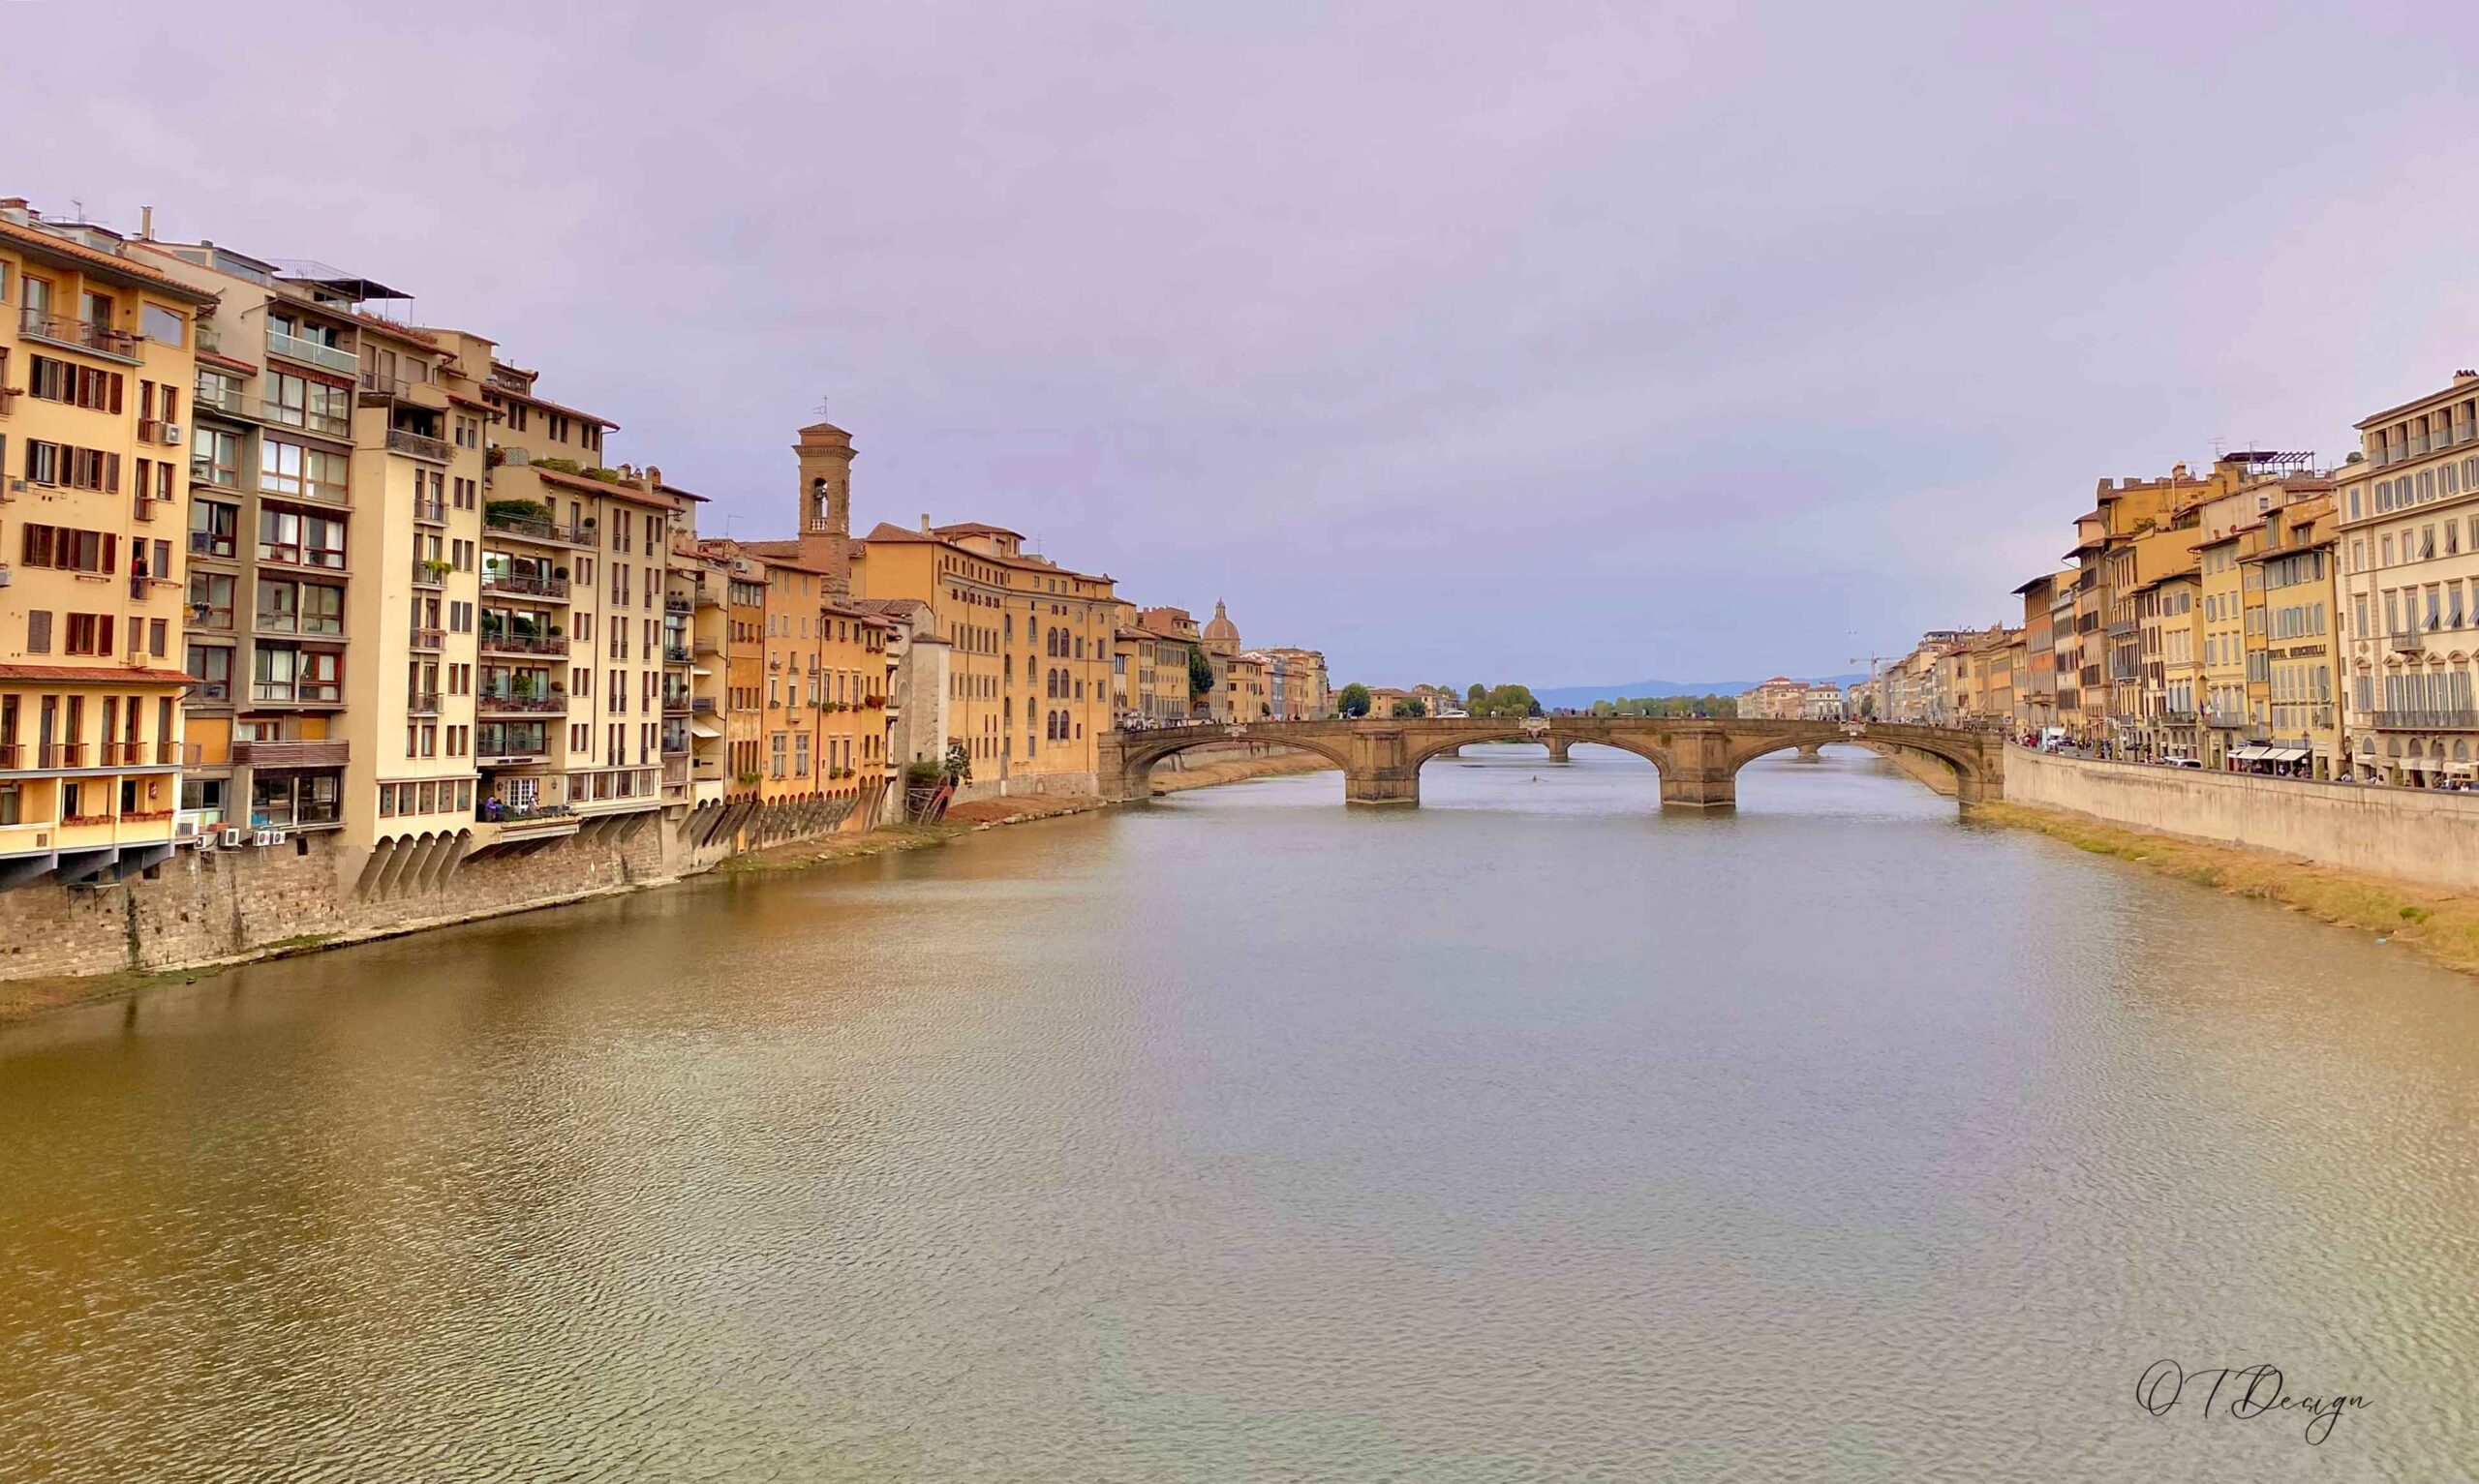 Strolling Across the Timeless Elegance of Florence's Bridges